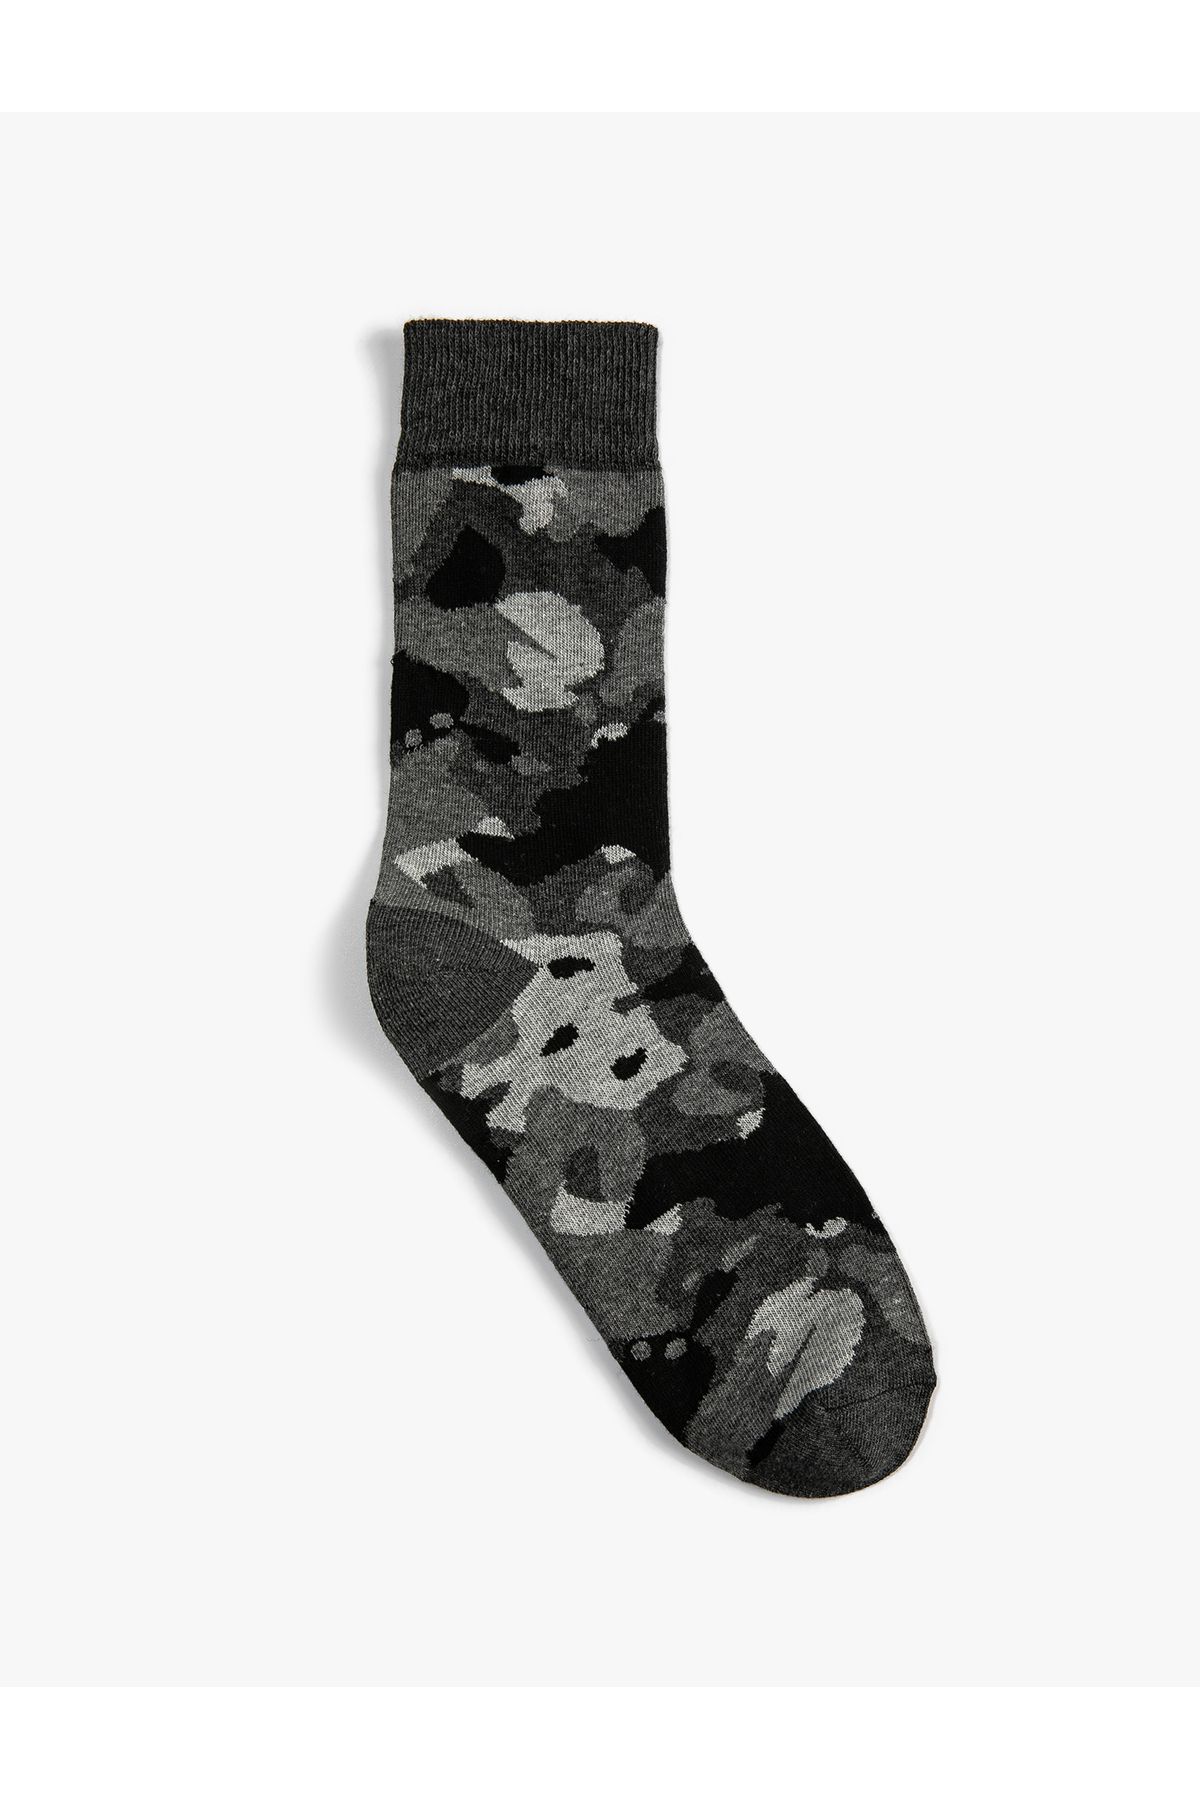 Koton Socket Socks Camouflage Patterned